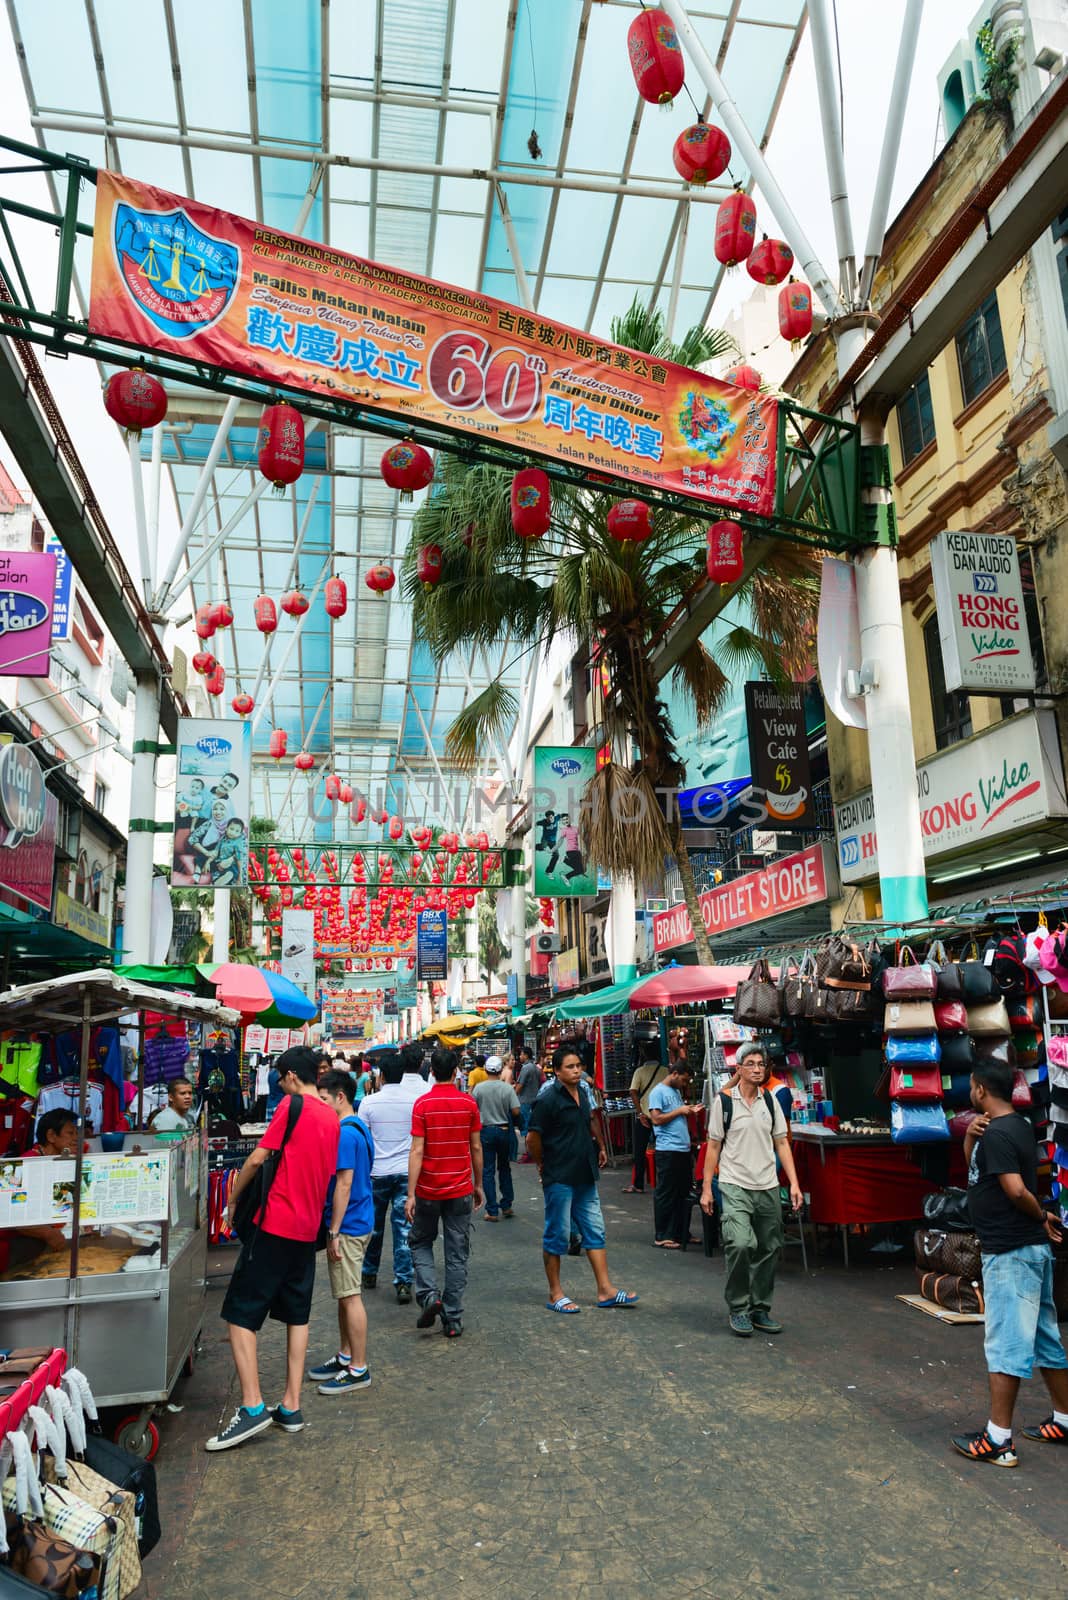 Chinatown market in Kuala Lumpur by iryna_rasko